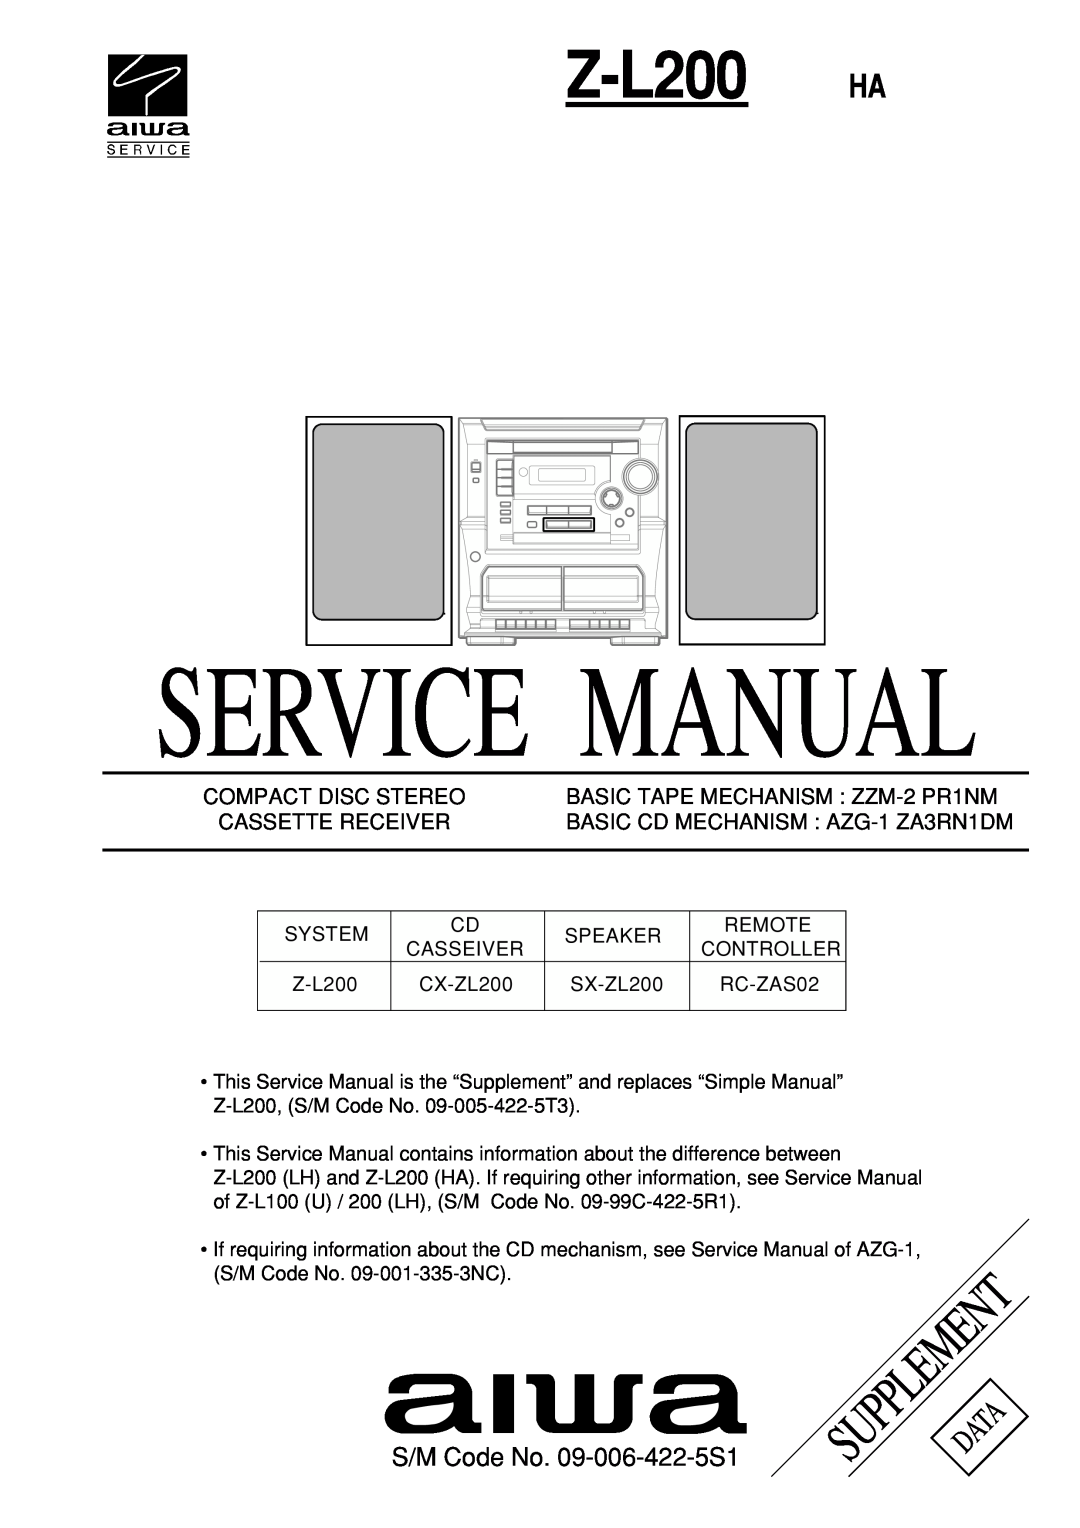 Aiwa service manual Compact Disc Stereo, BASIC TAPE MECHANISM ZZM-2PR1NM, Cassette Receiver, Z-L200HA, Supplementdata 